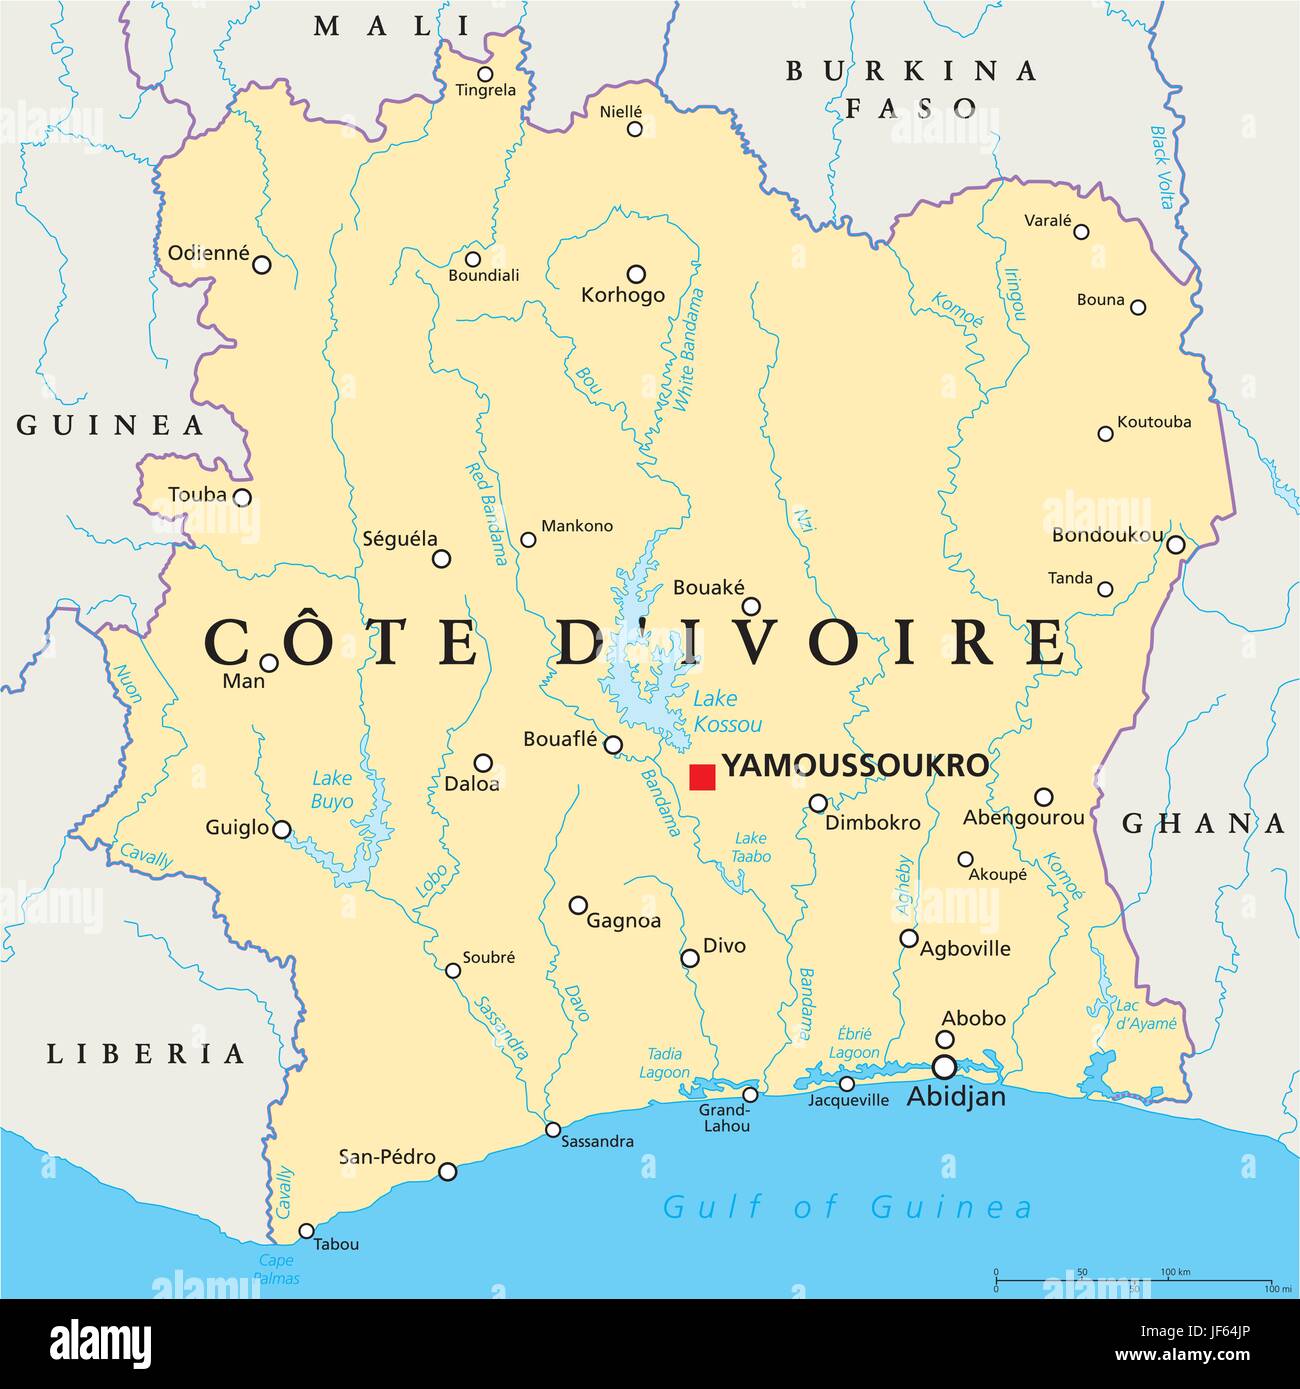 Ivory Coast Map Atlas Map Of The World Travel Africa Illustration JF64JP 